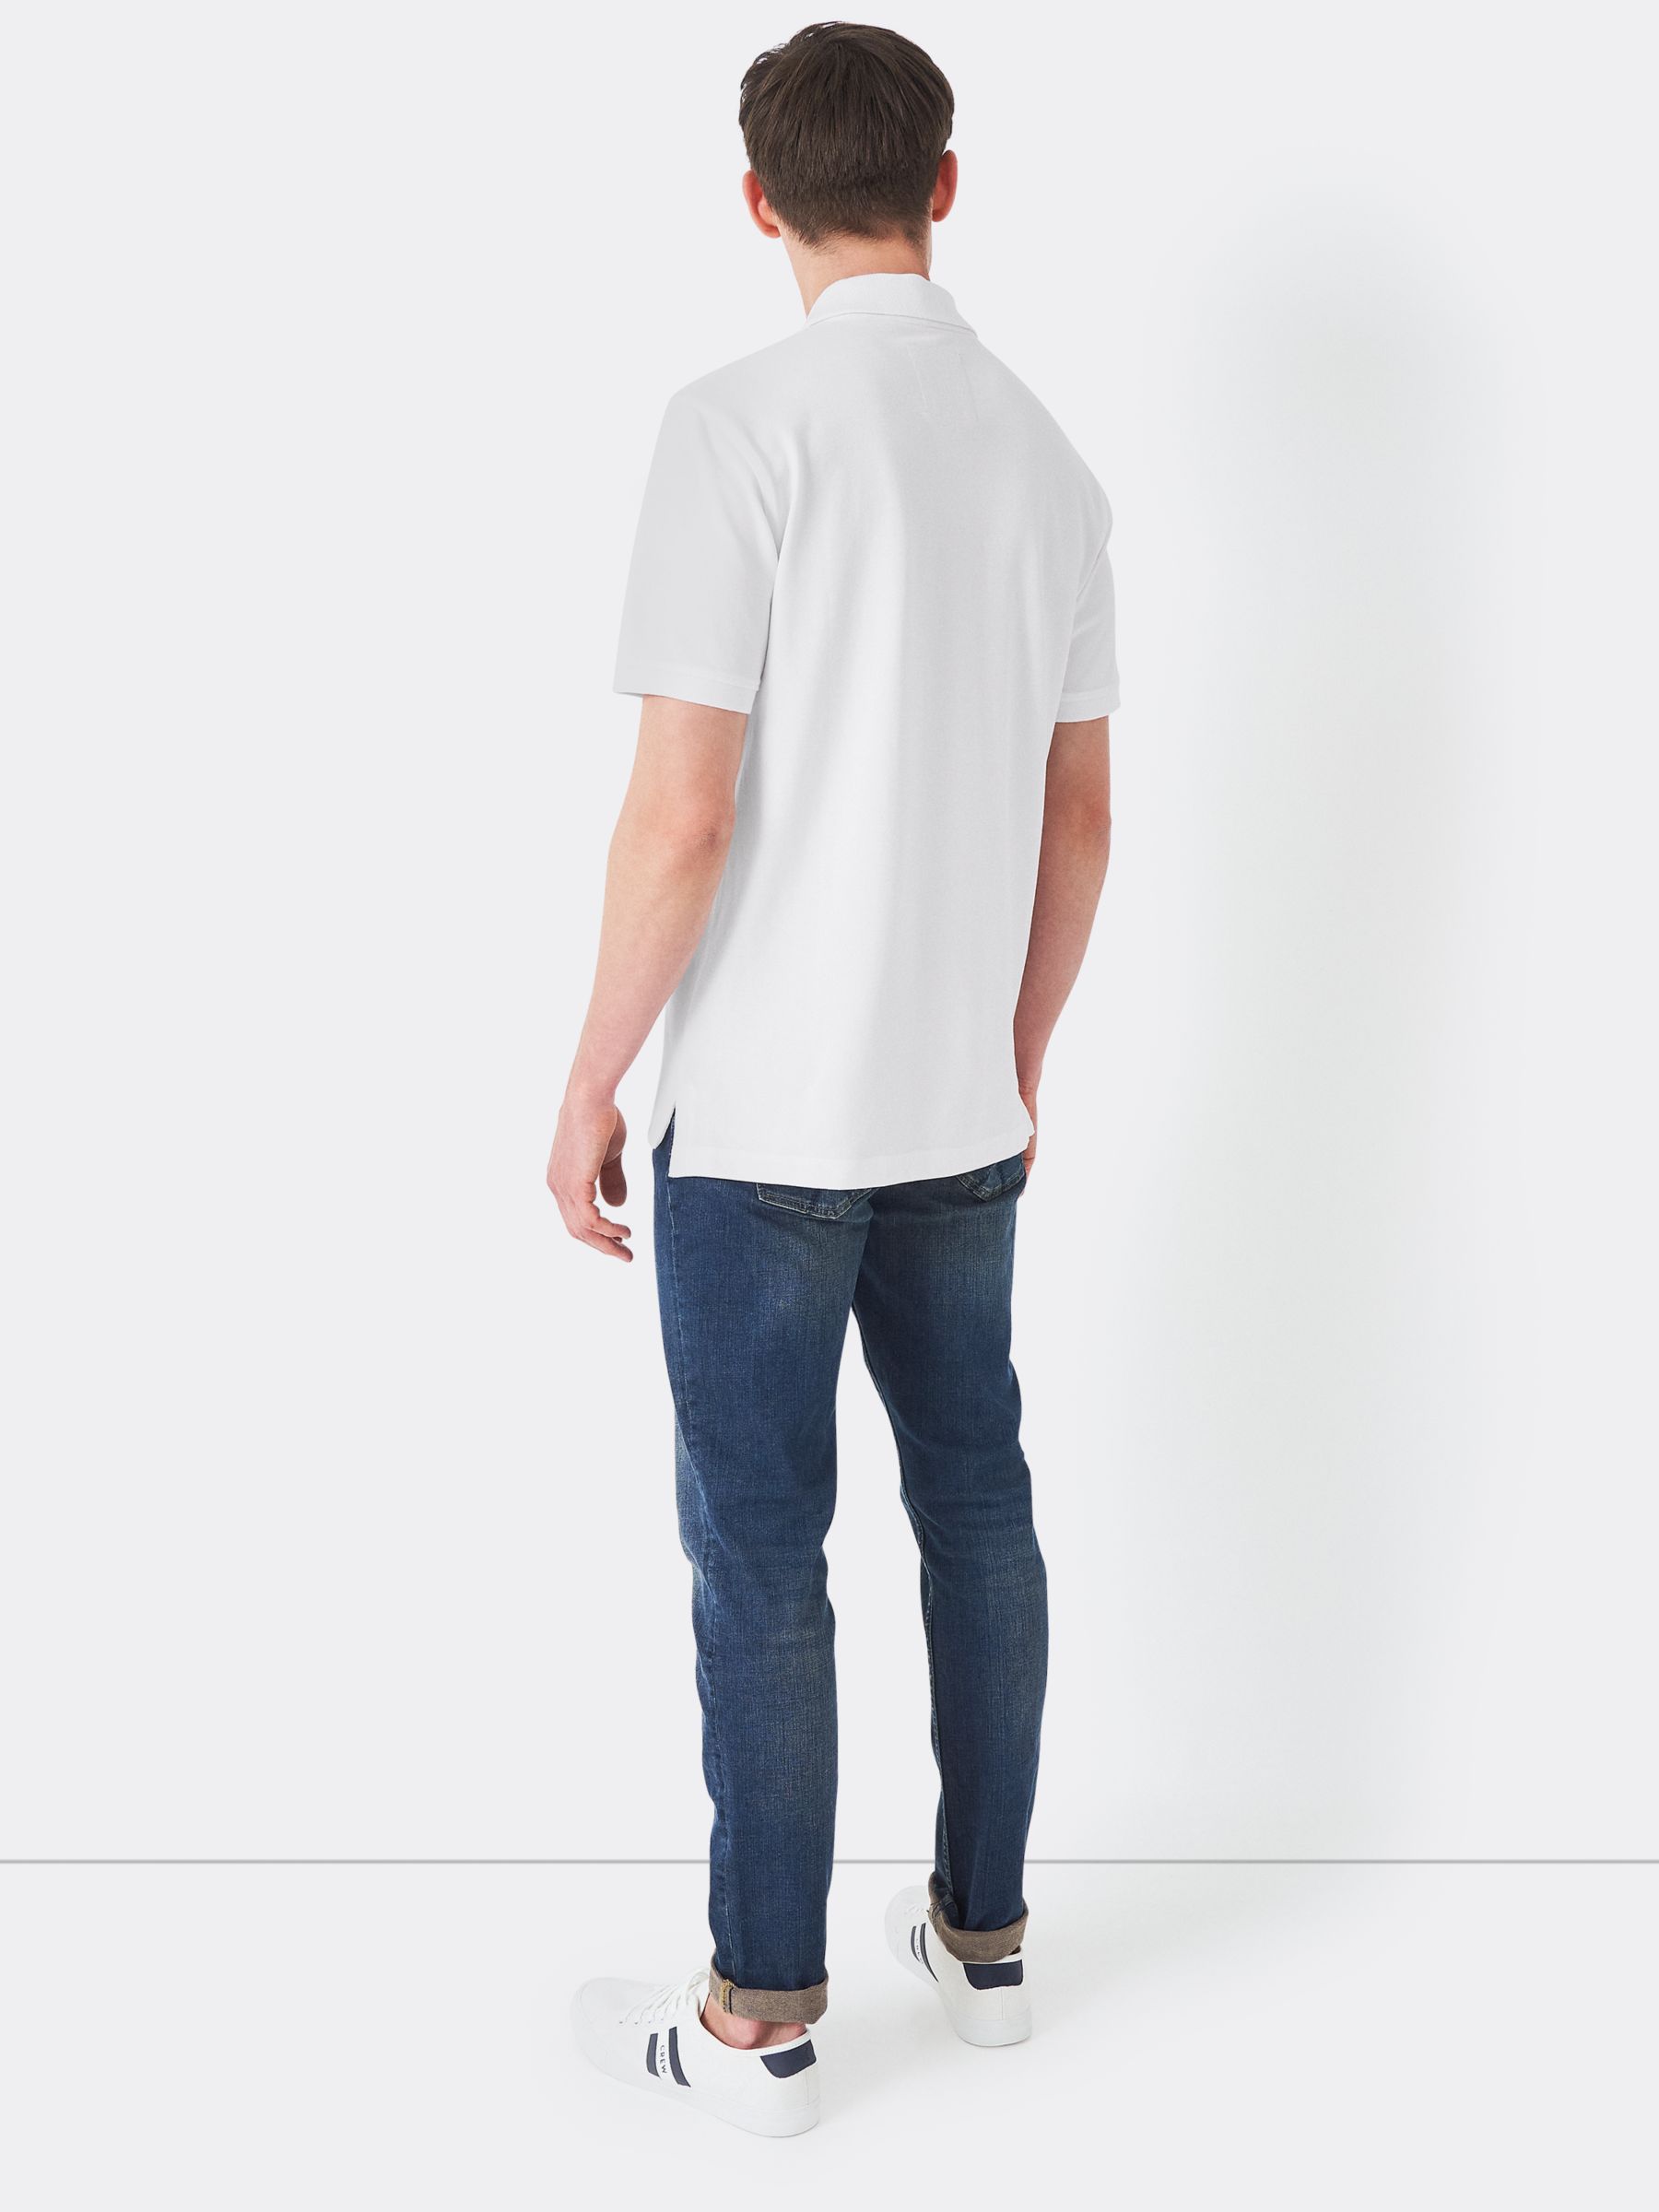 Crew Clothing Stretch Pique Slim Fit Polo Shirt, White, XS